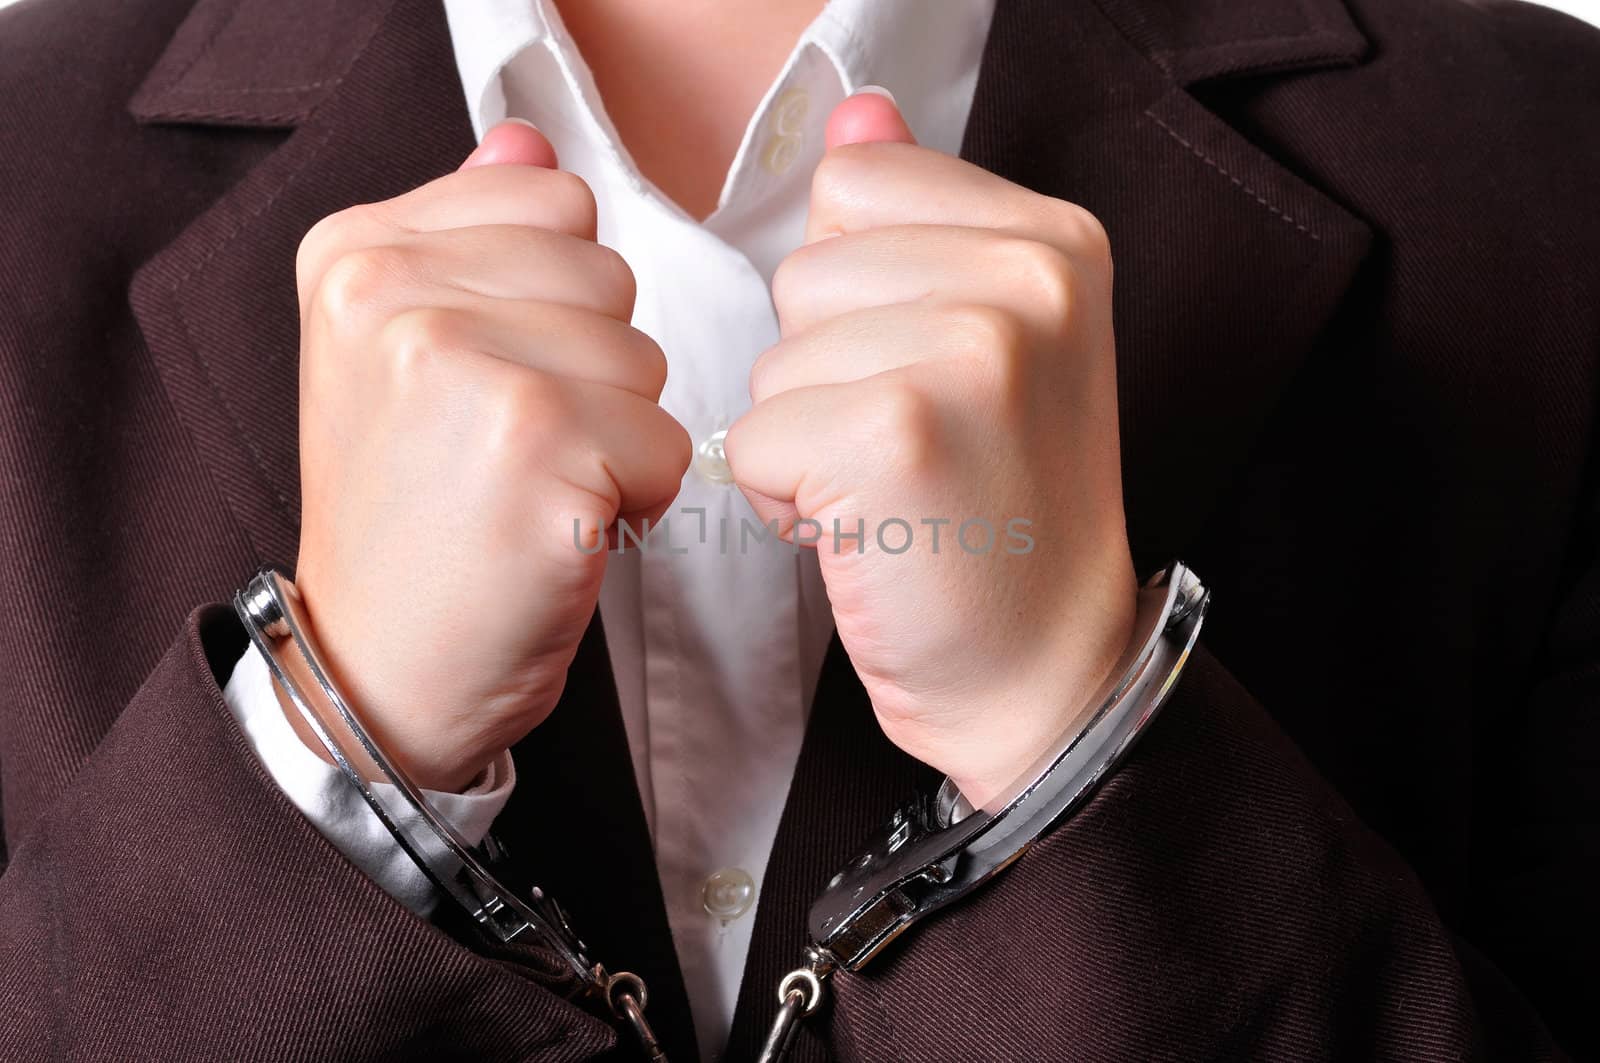 Handcuffed by ruigsantos